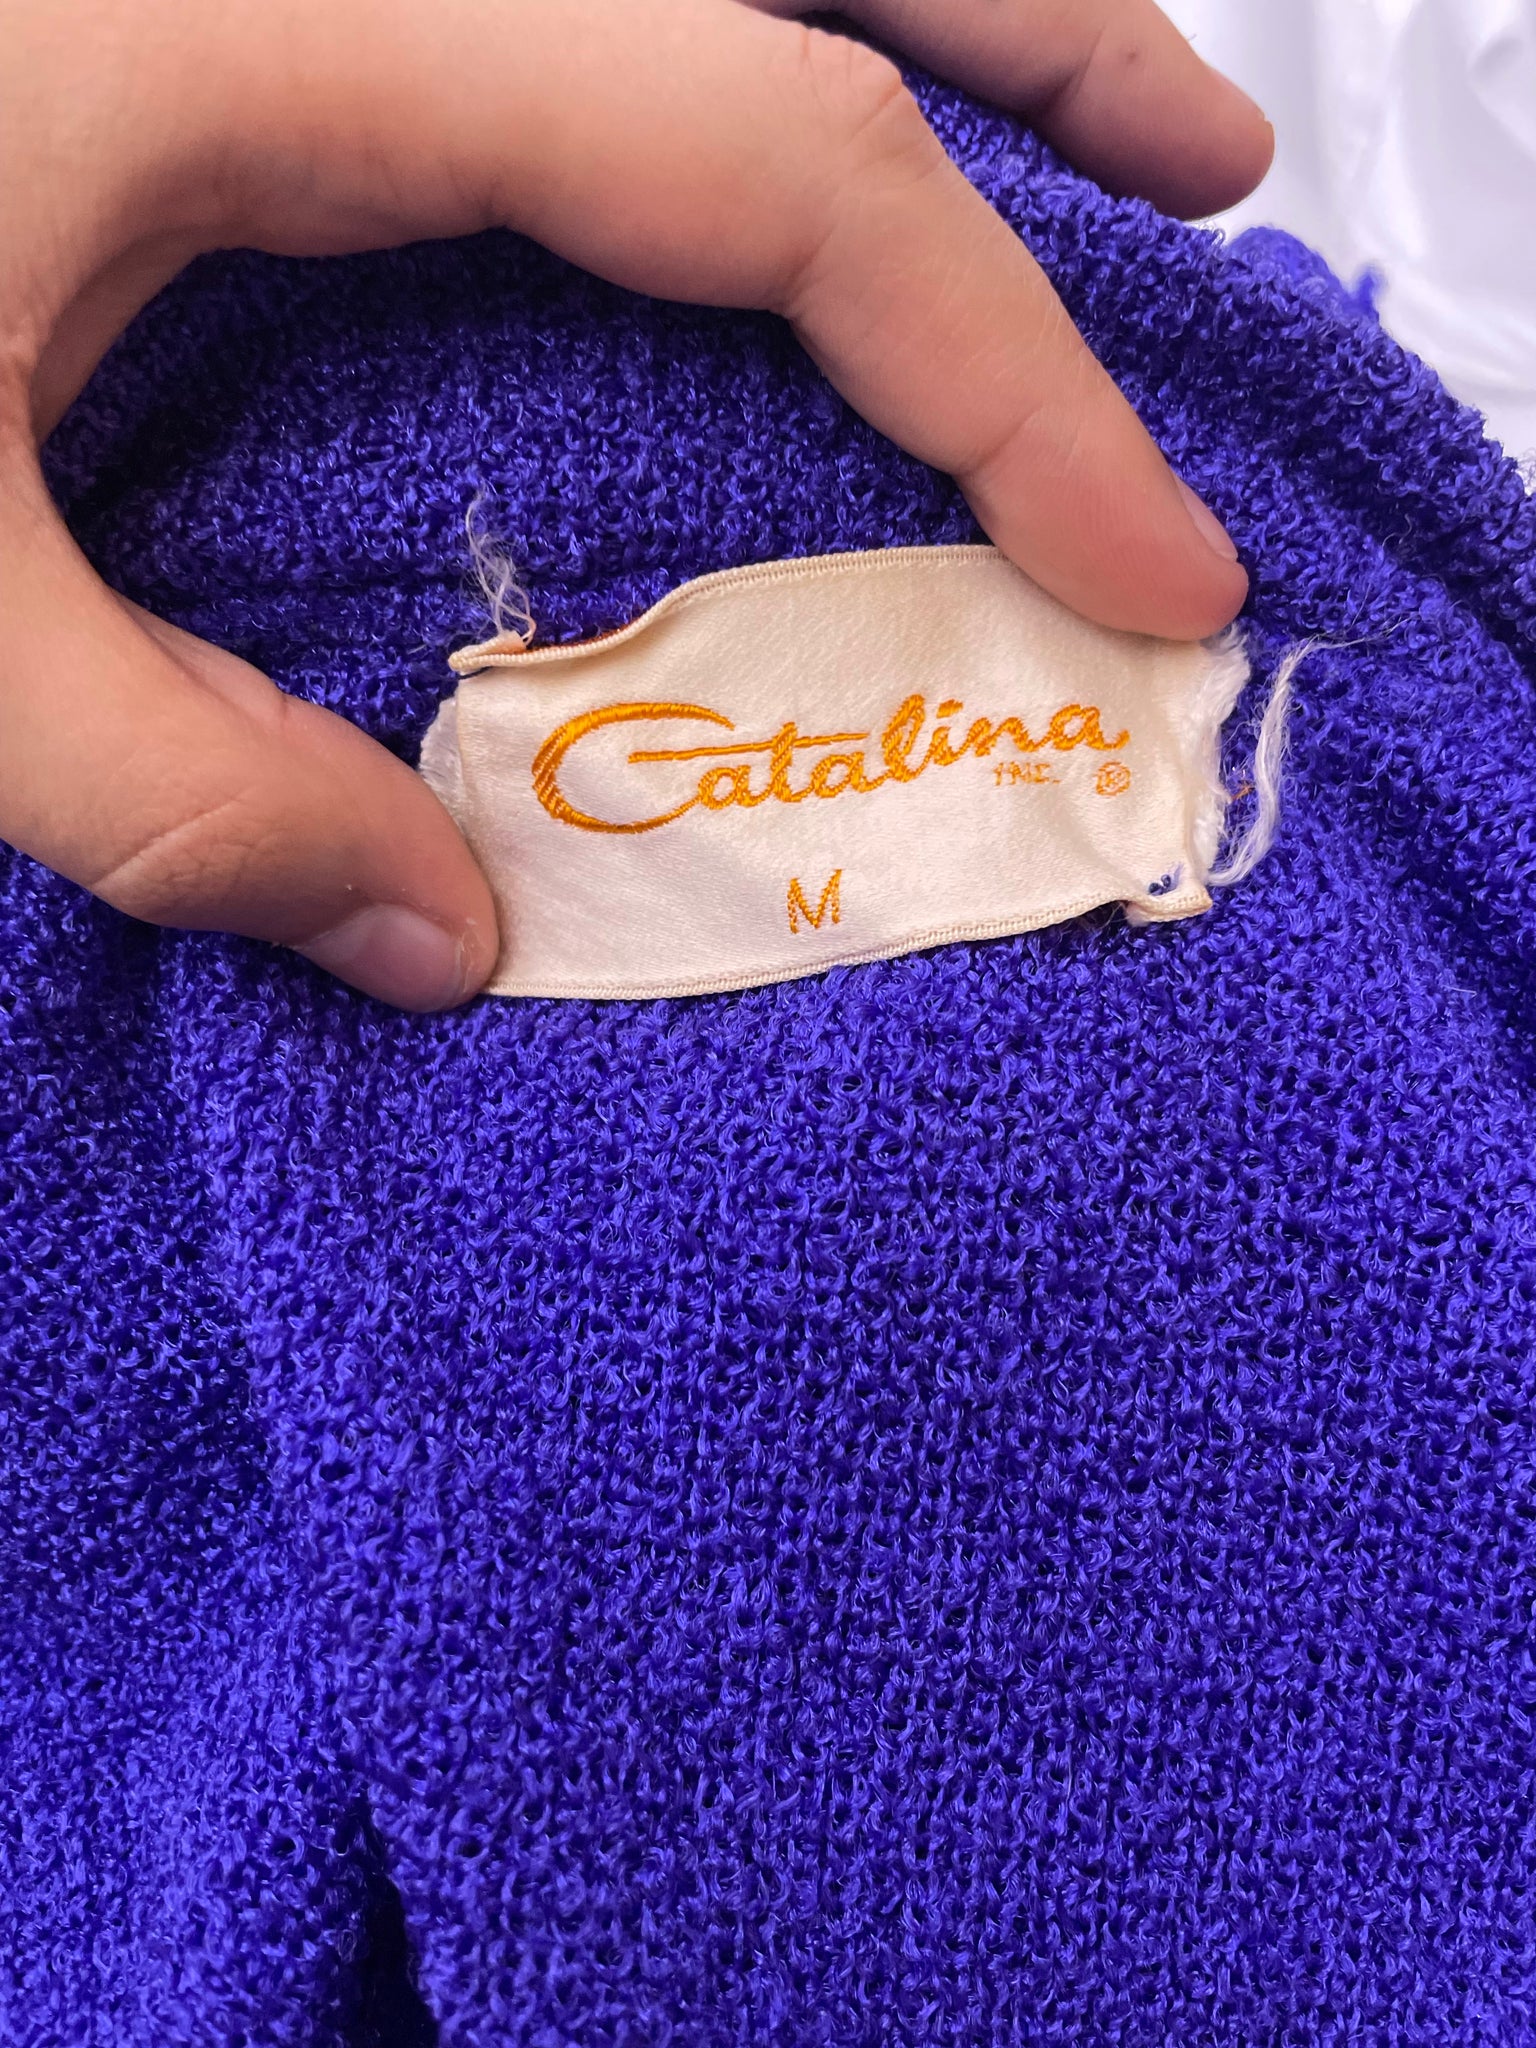 Vintage 60s Catalina v neck sweater, Size M